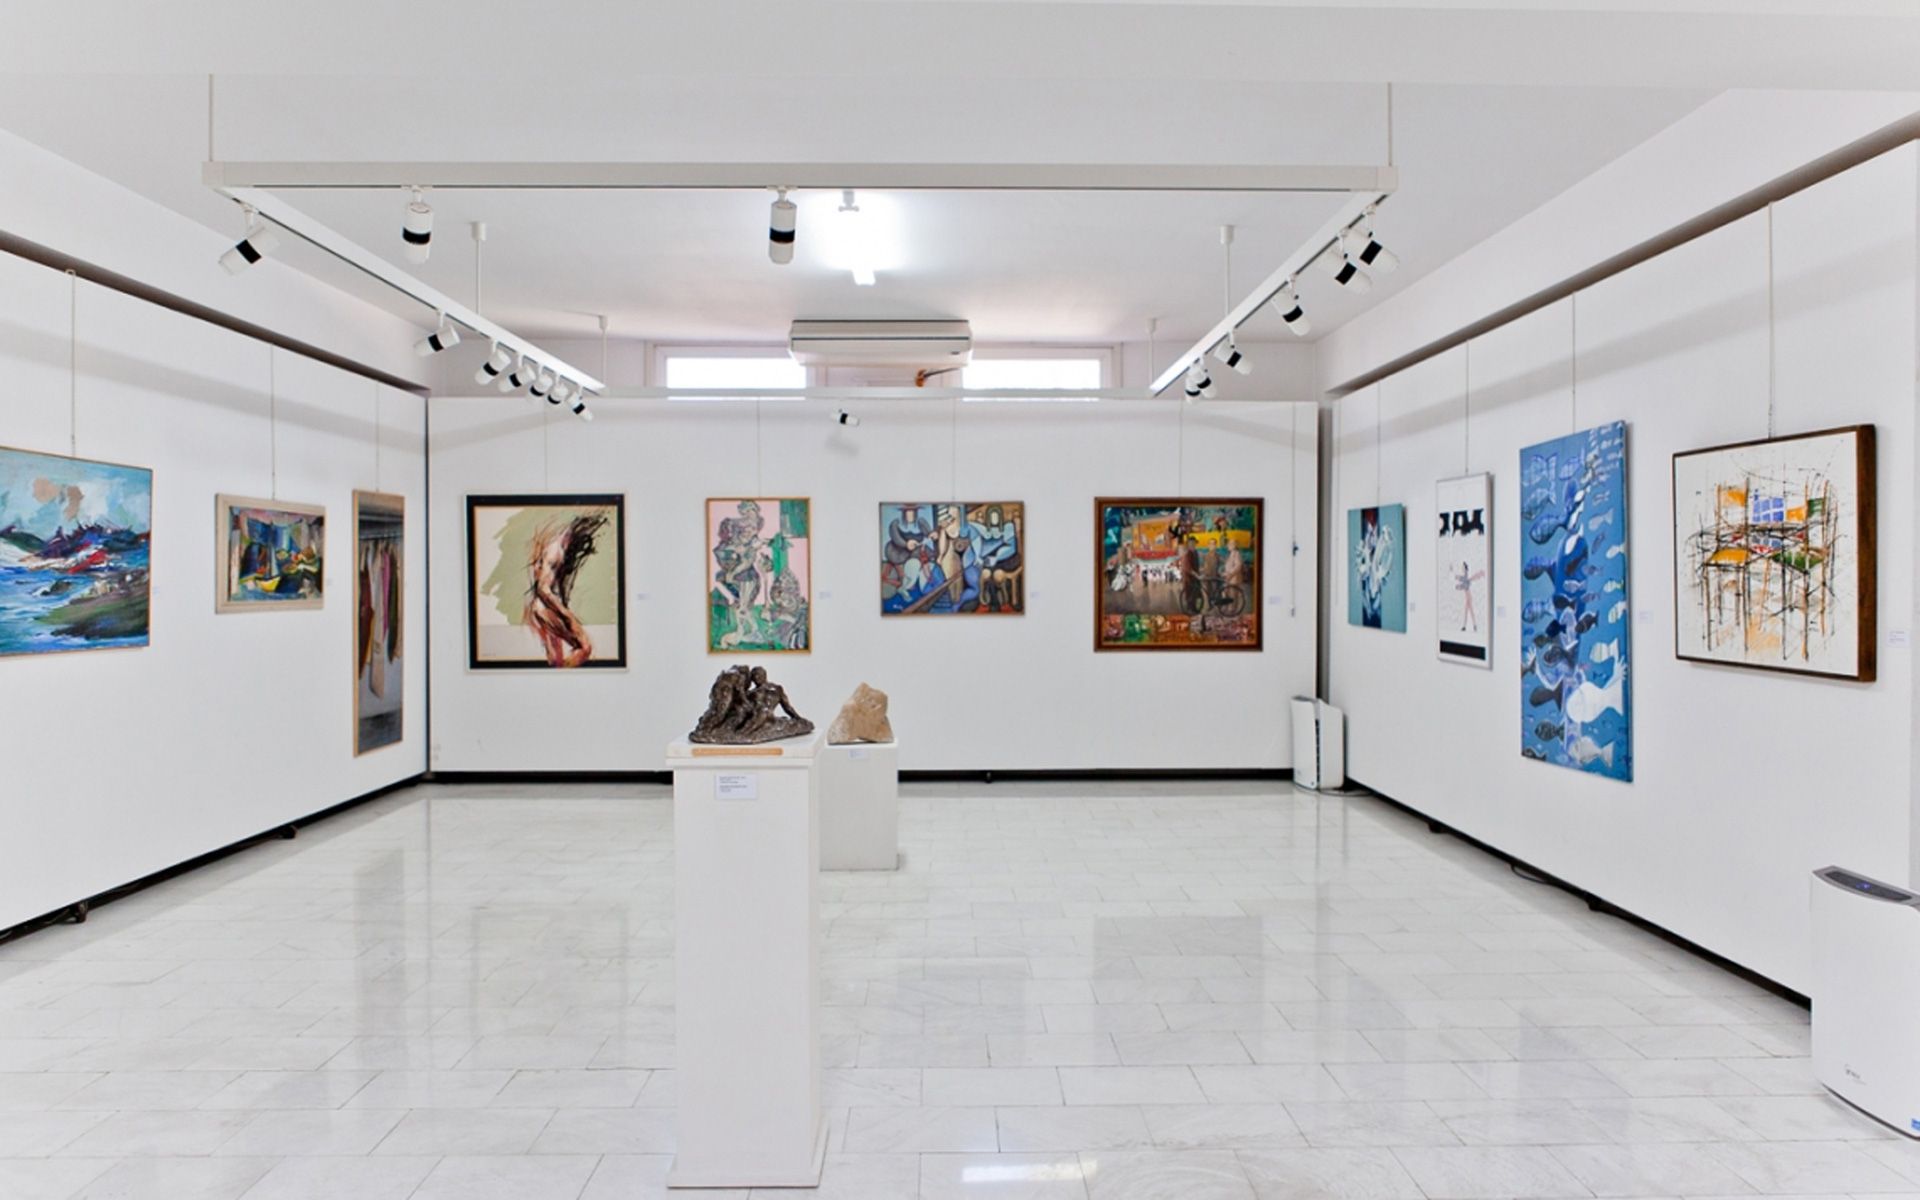 Public Gallery in Cyprus